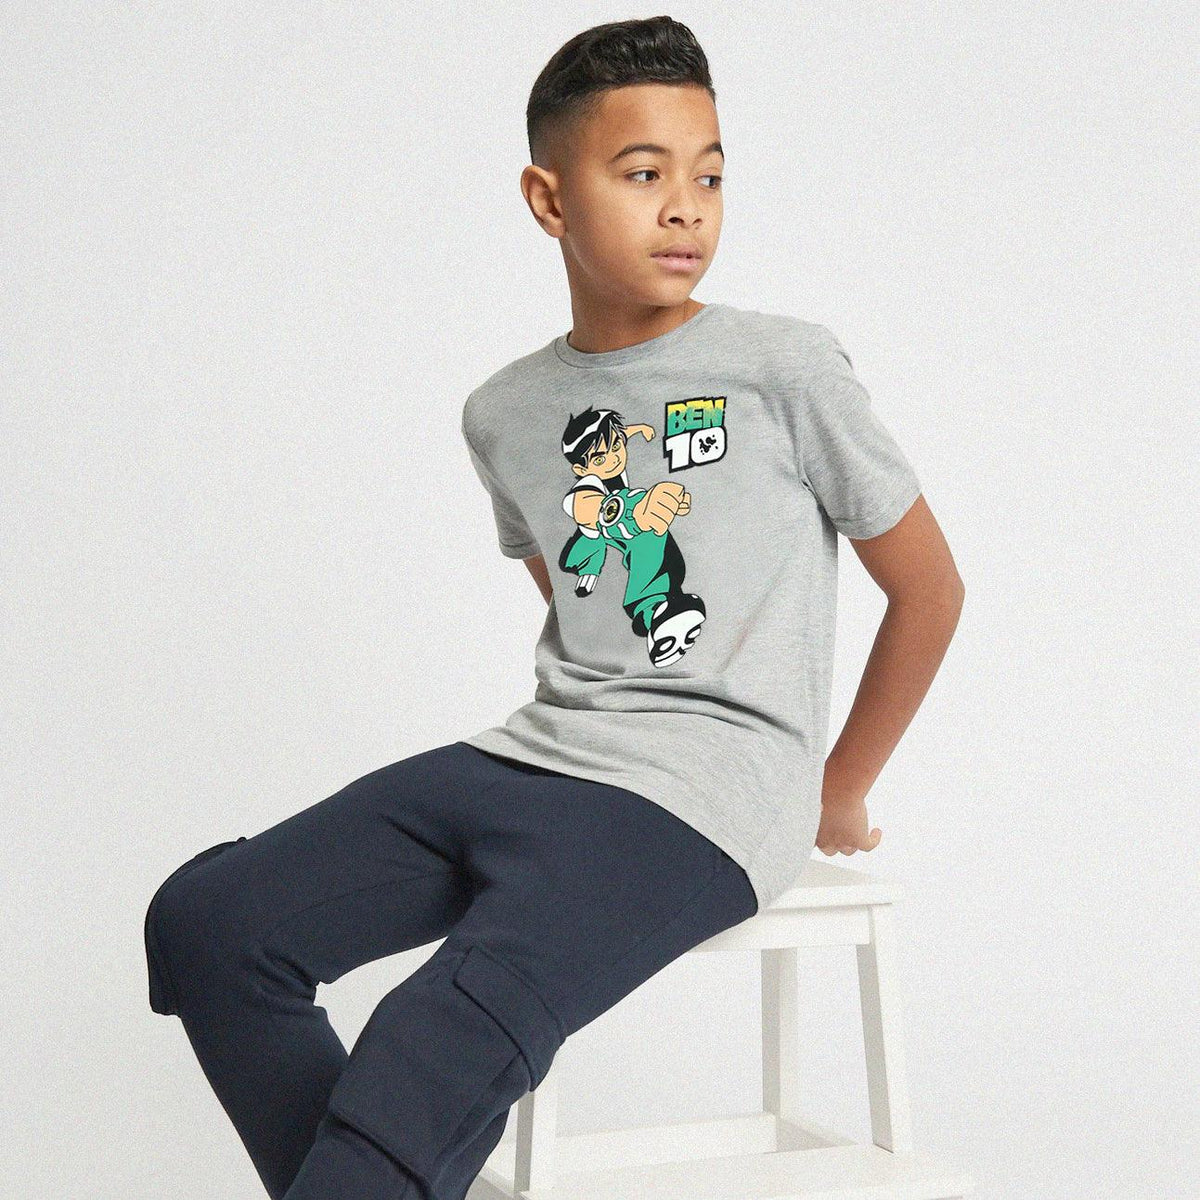 Premium Quality Soft Cotton Printed T-Shirt For Boys 9 MONTH - 10 YRS (MI-11064) - Brands River